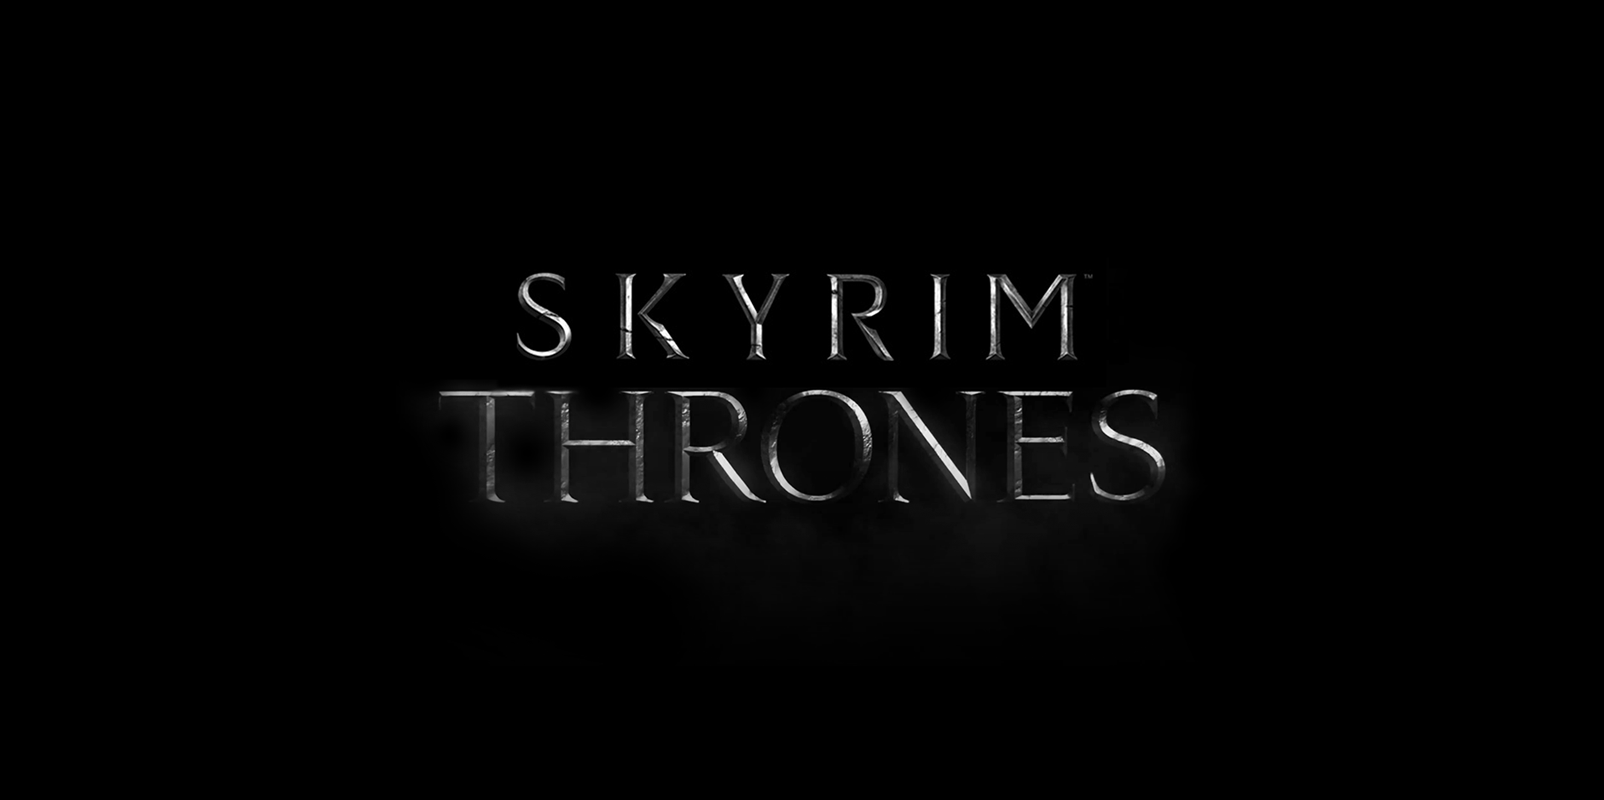 Skyrim: Videogame of Thrones